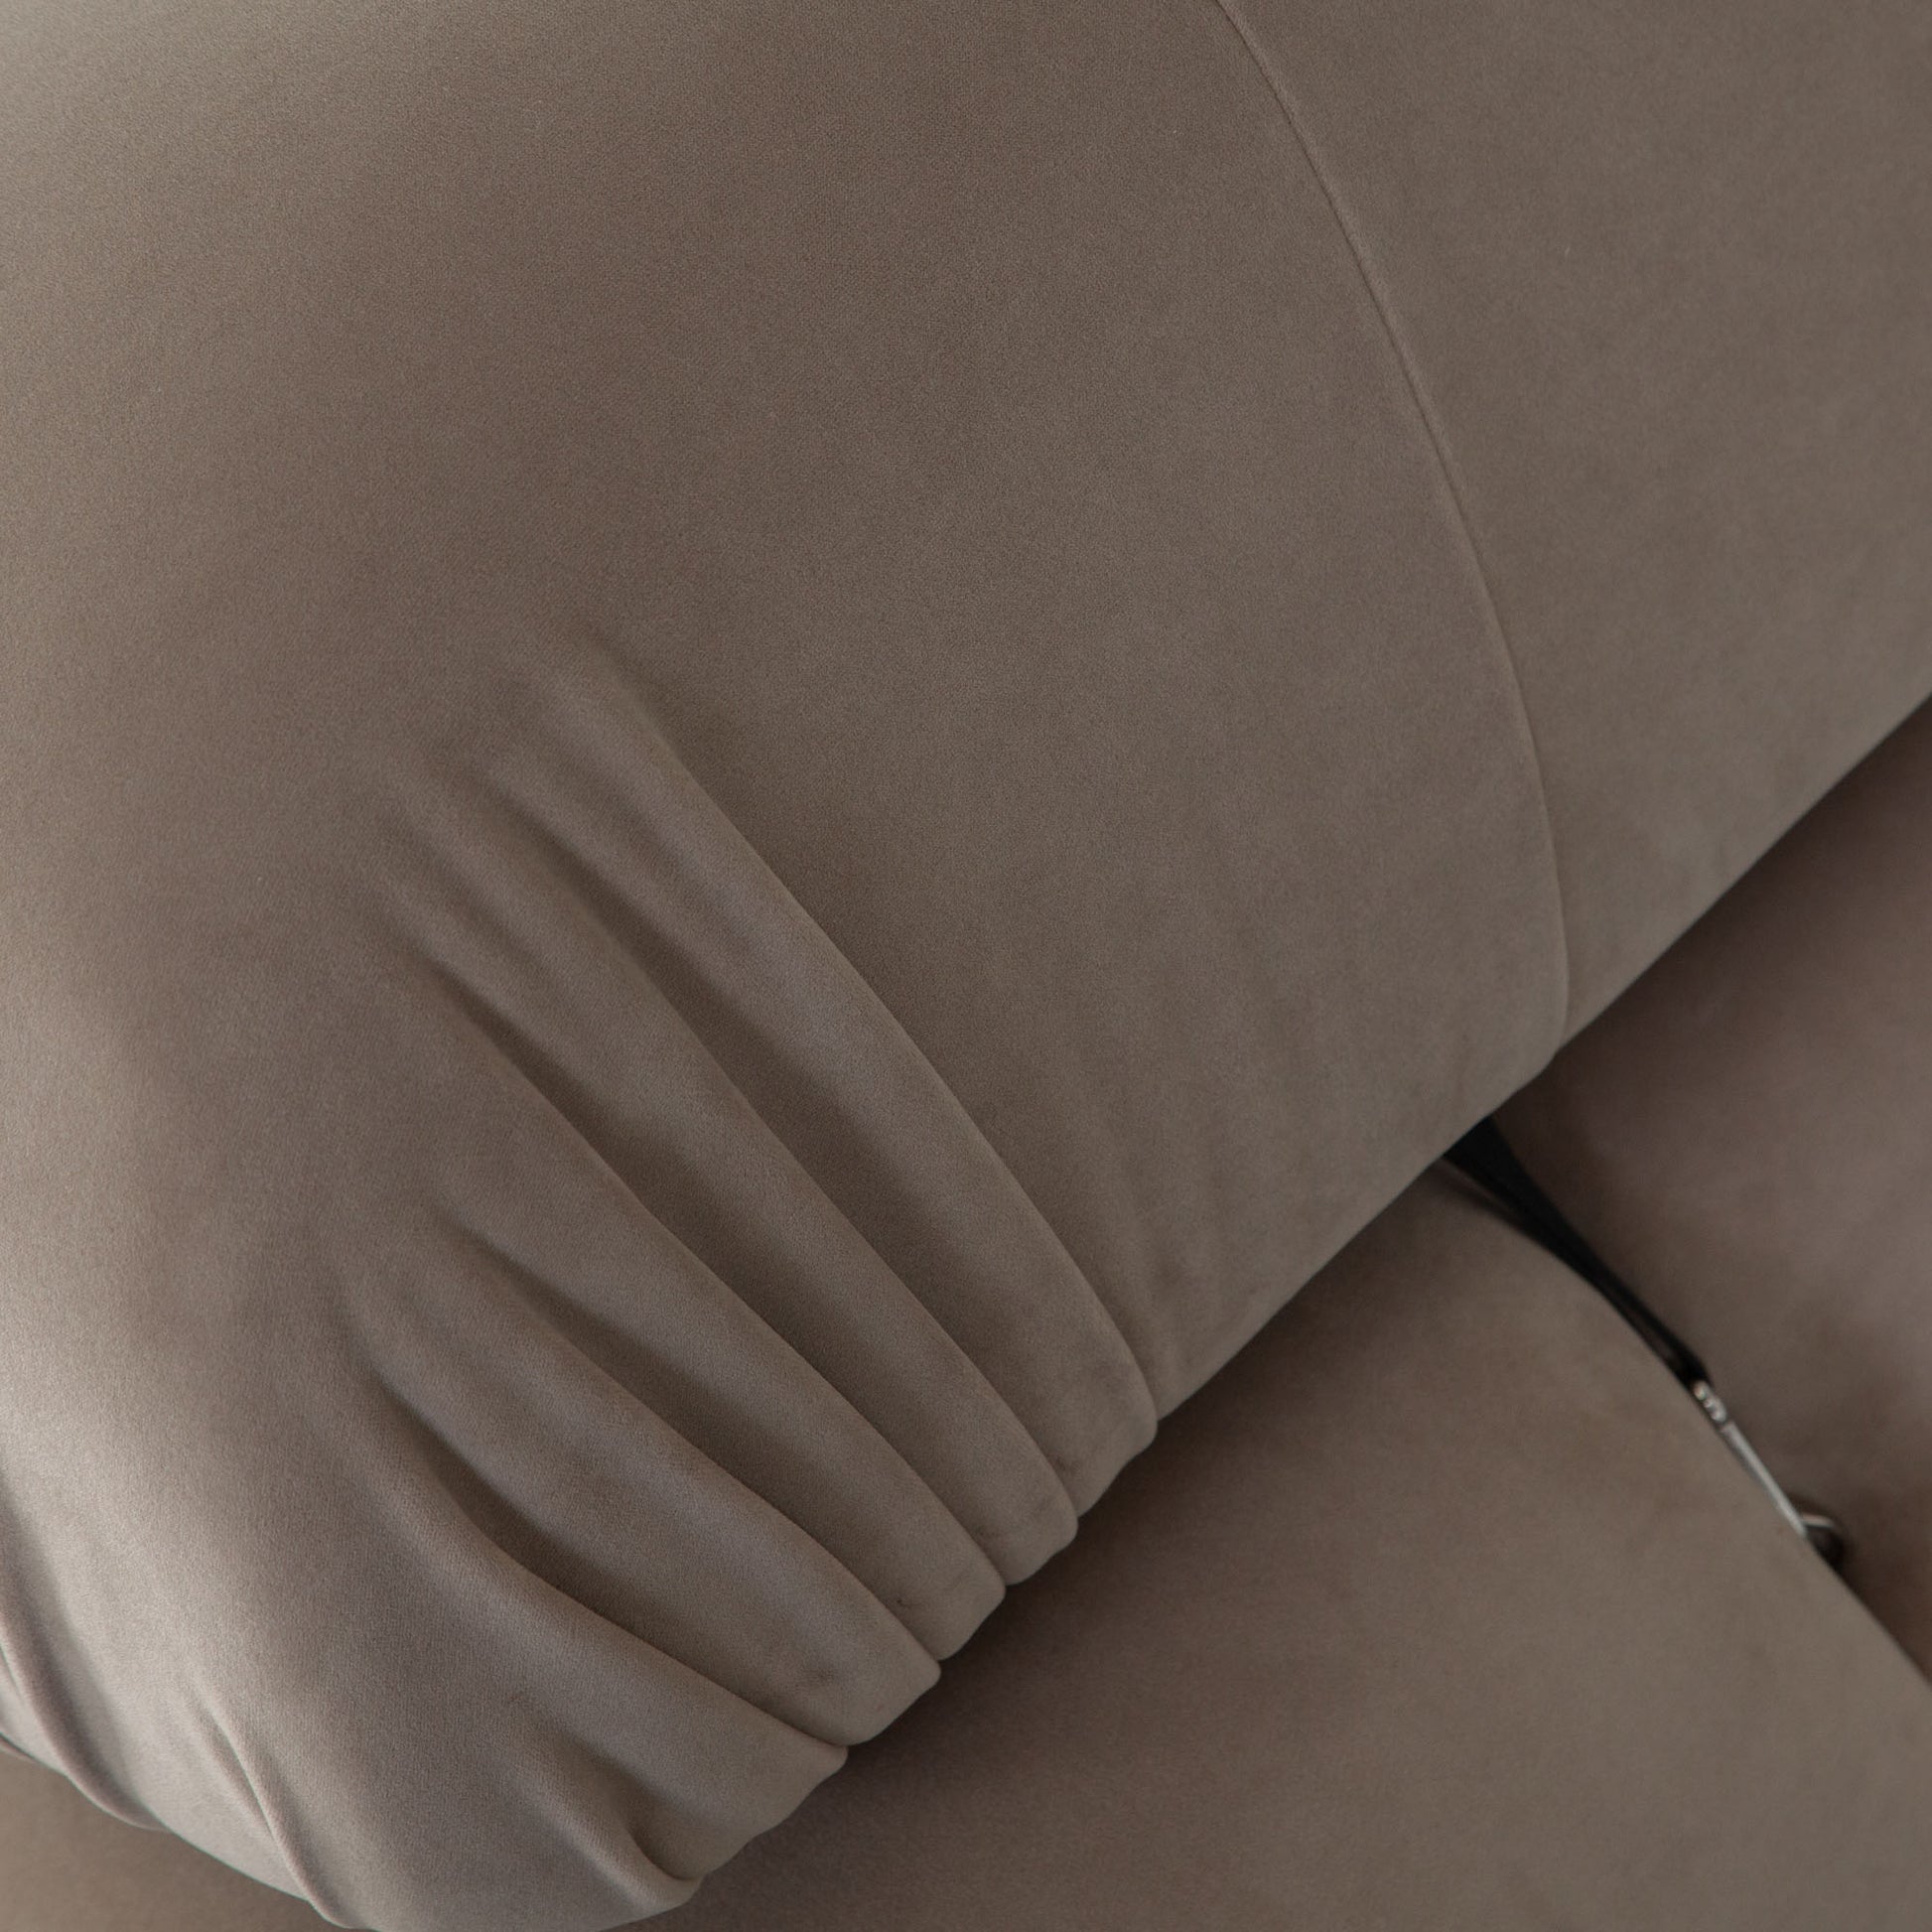 Paloma Modular Sofa, mink tan velvet